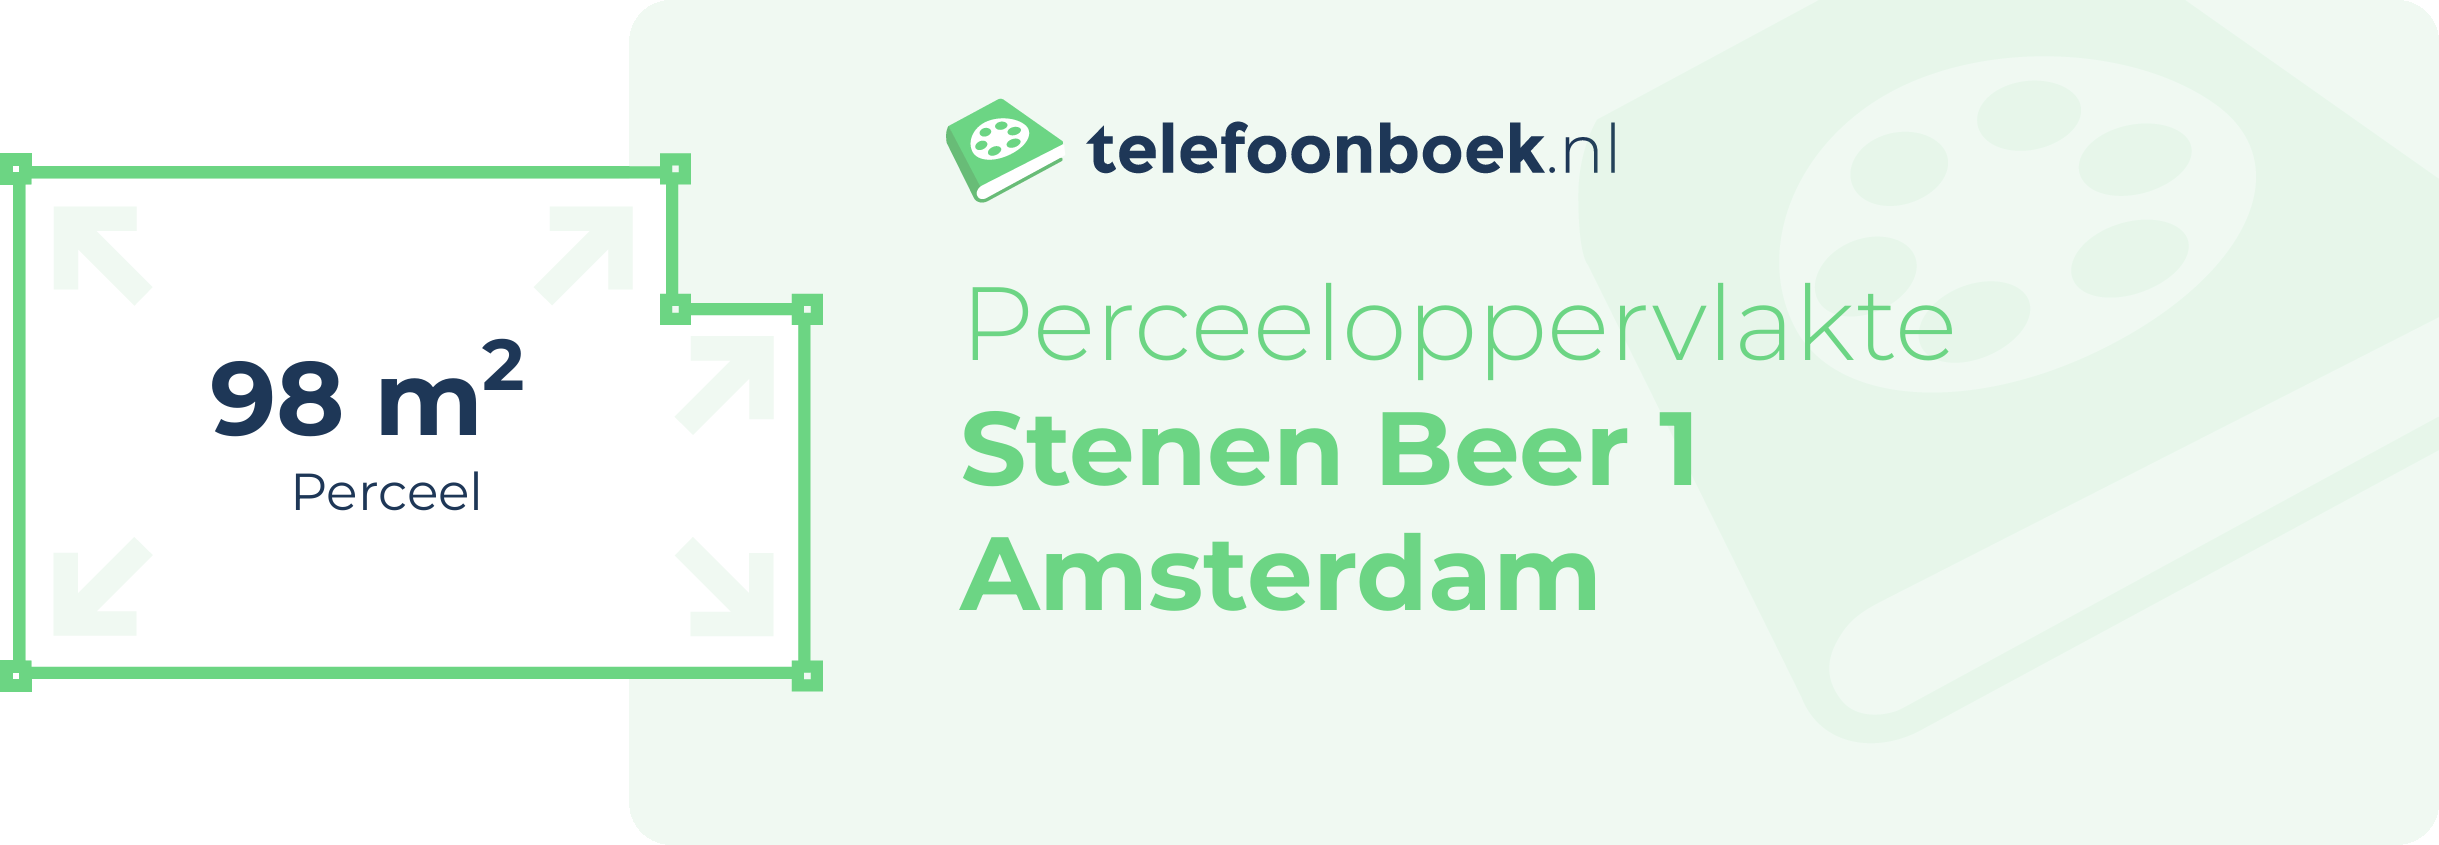 Perceeloppervlakte Stenen Beer 1 Amsterdam